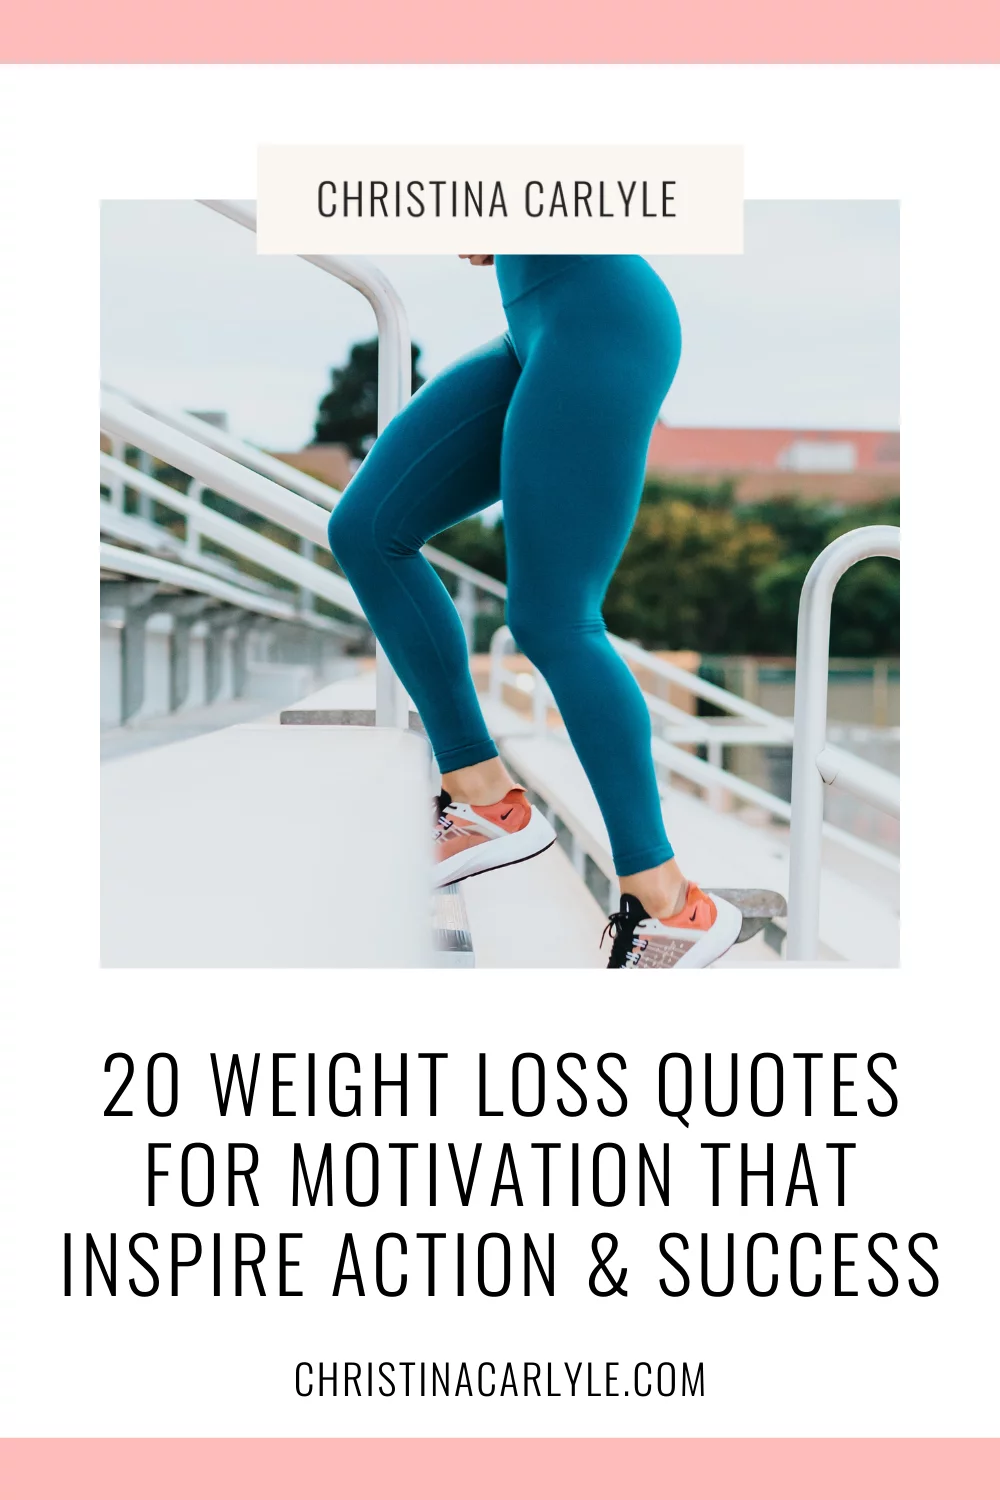 weight loss motivation for women